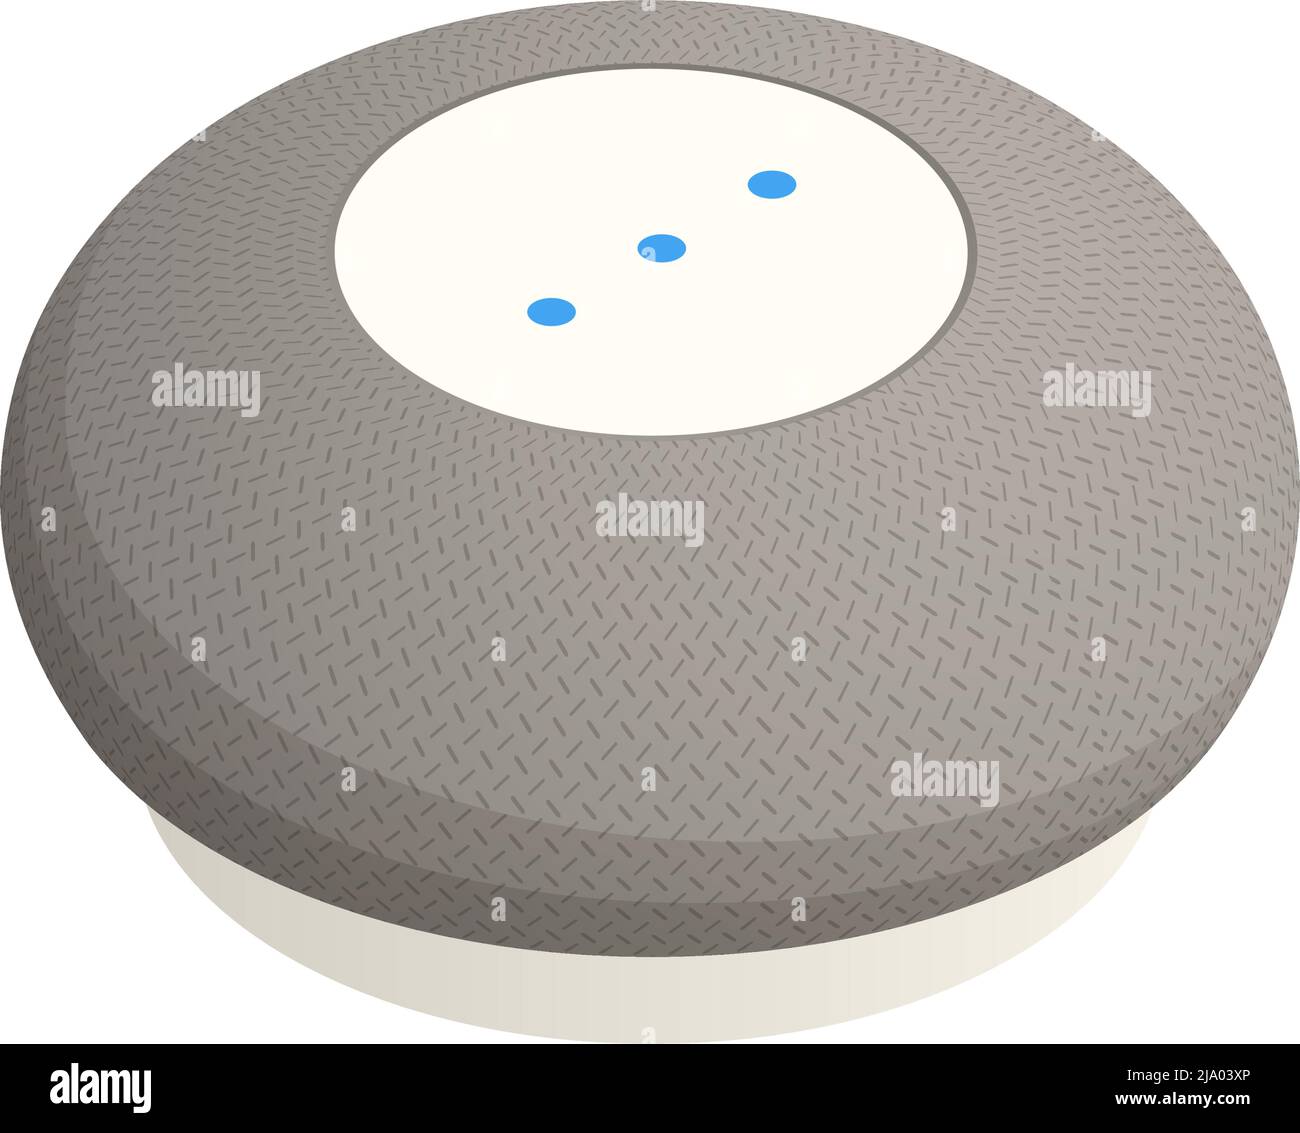 Mini round smart speaker isometric 3d icon on white background vector illustration Stock Vector